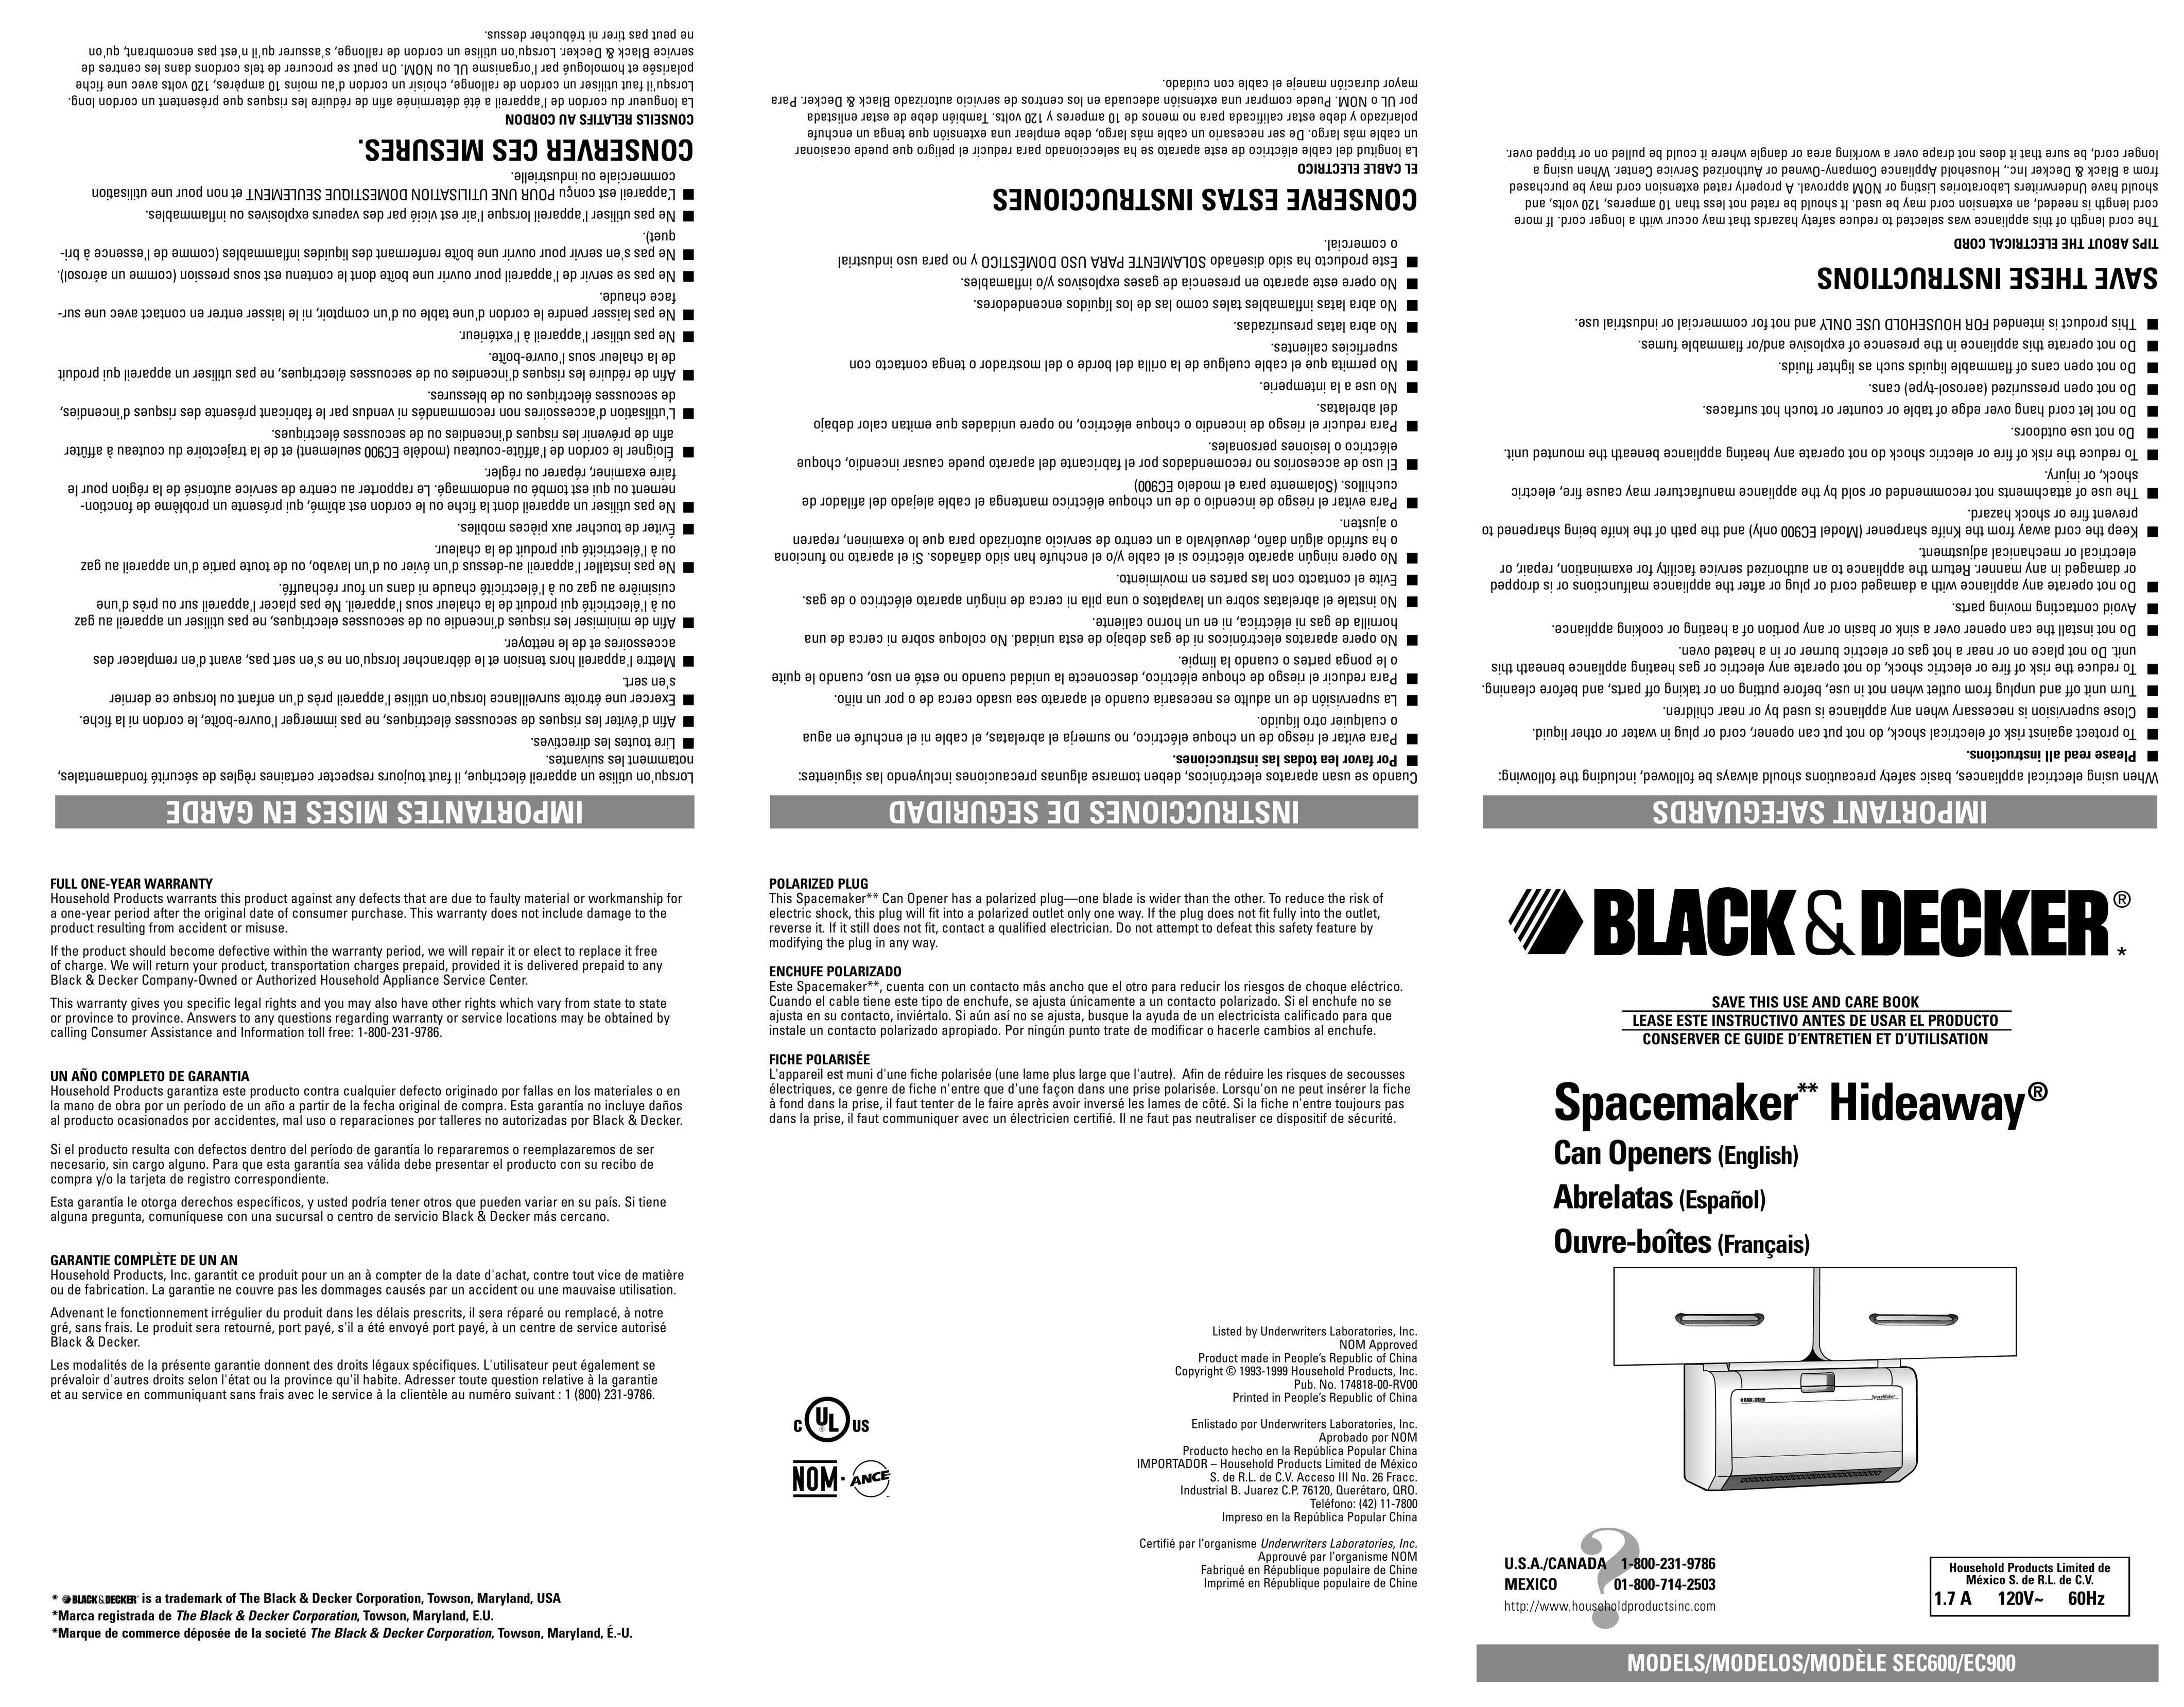 Black & Decker EC600/EC900 Can Opener User Manual